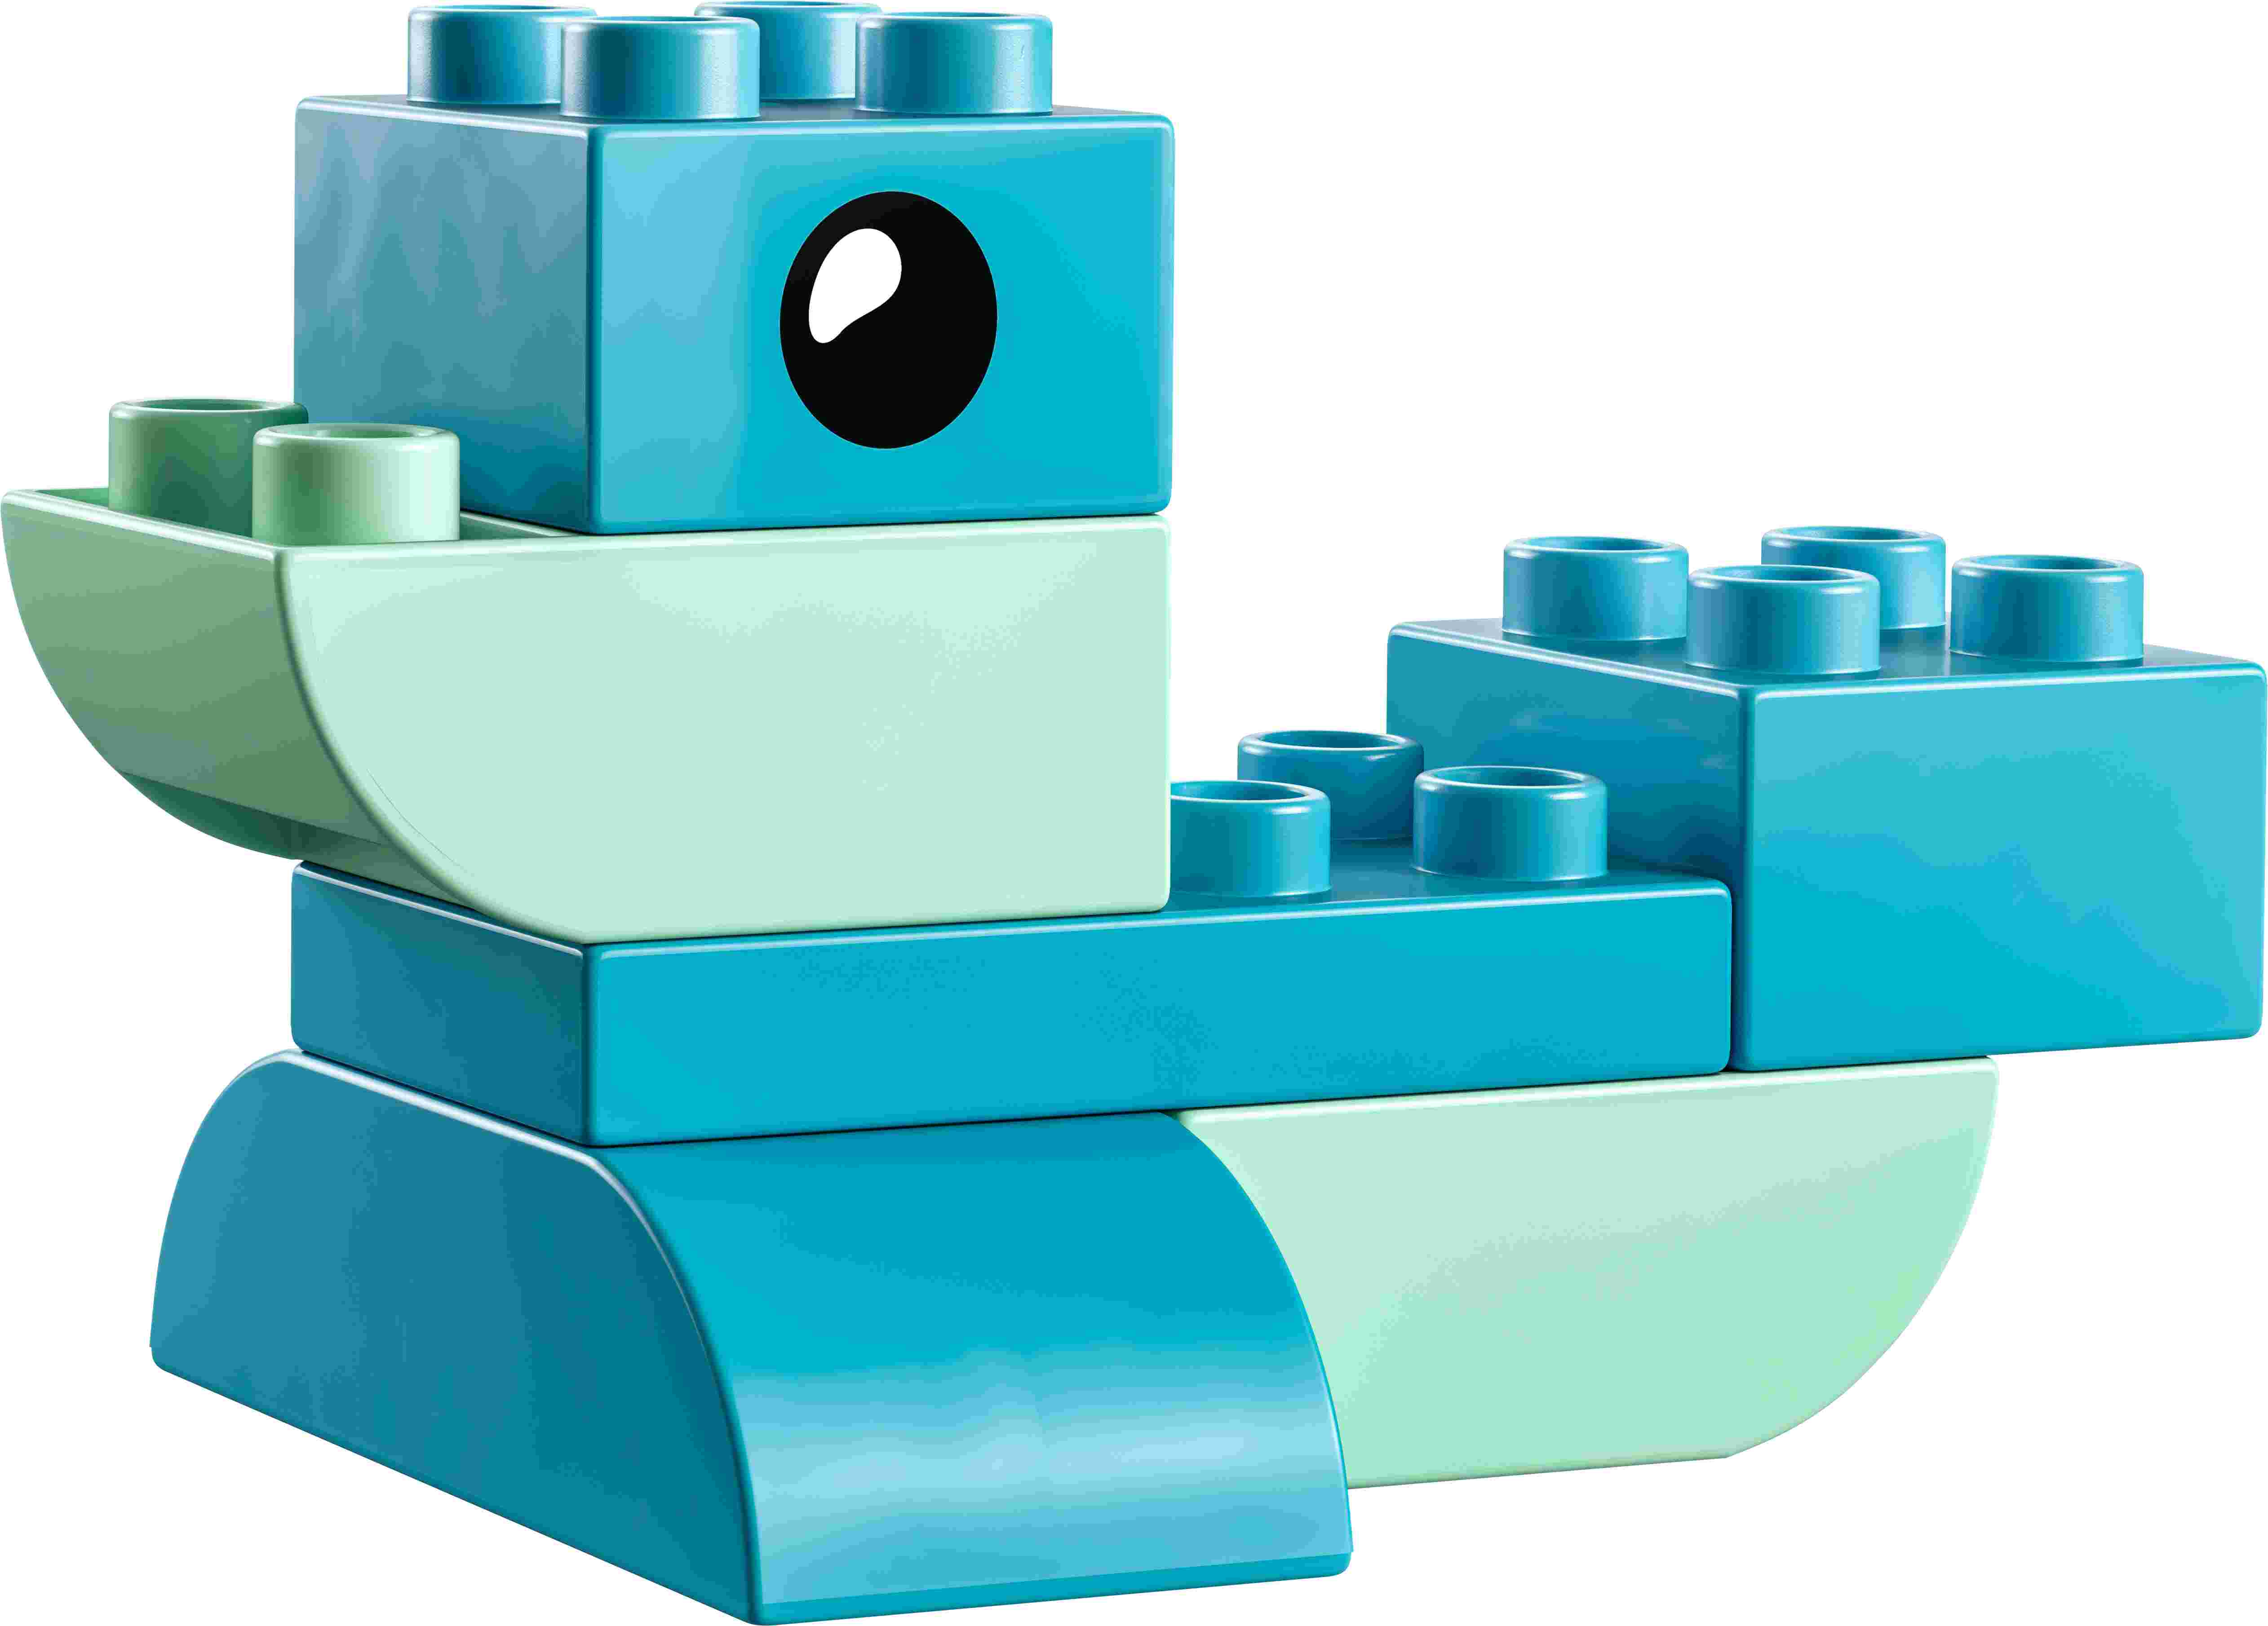 LEGO 30648 DUPLO My First Wal, Pelikan oder Kegelrobbe, 3-in-1